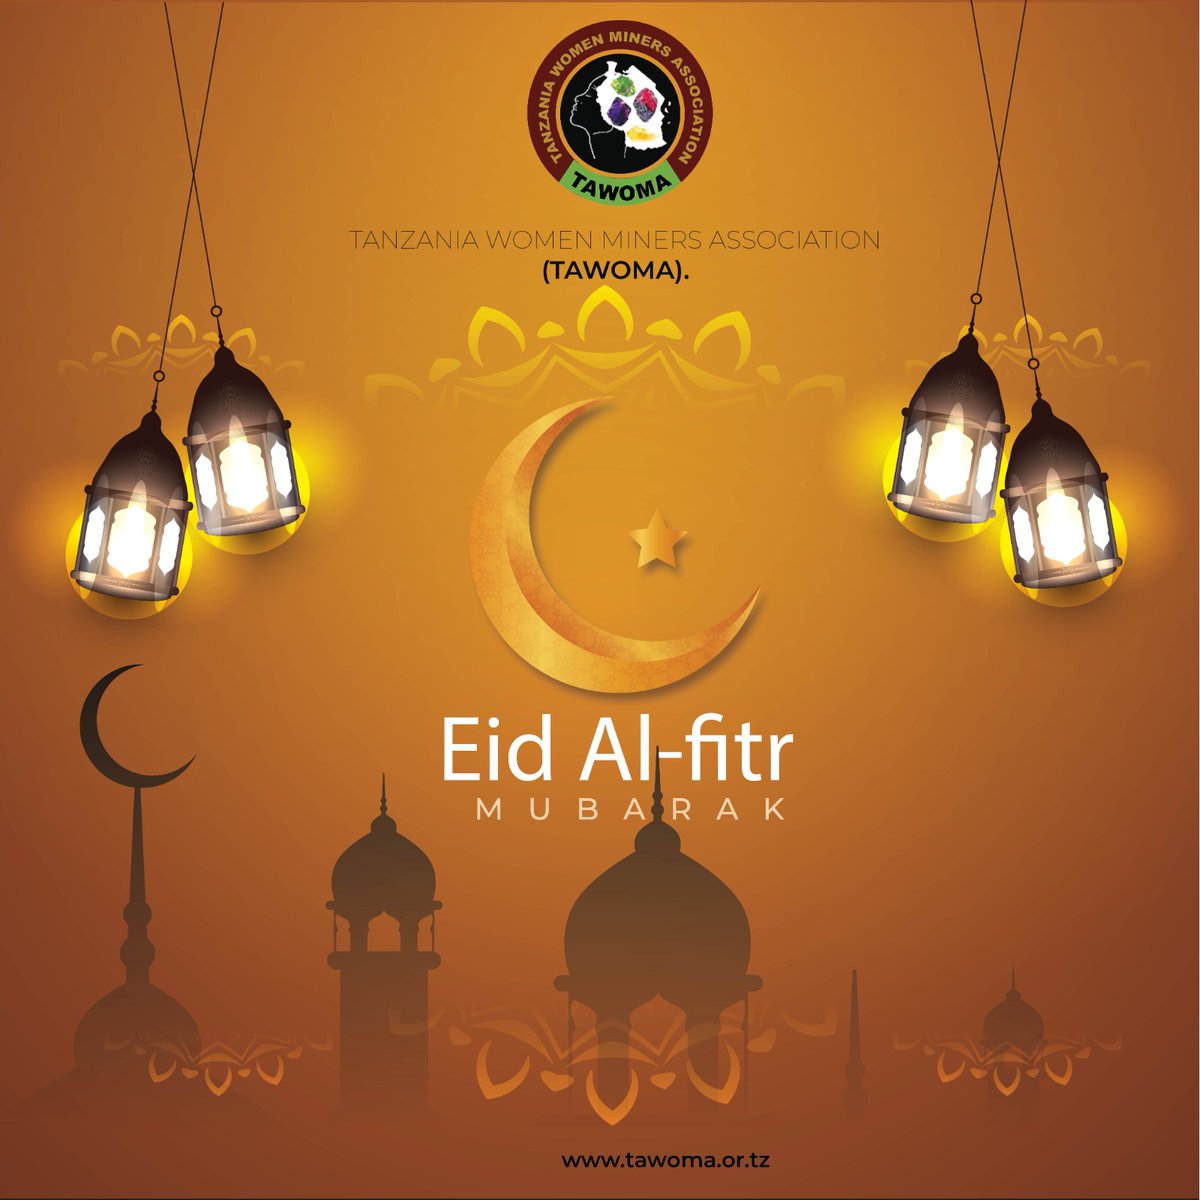 #EidMubarak #EidAlFitr